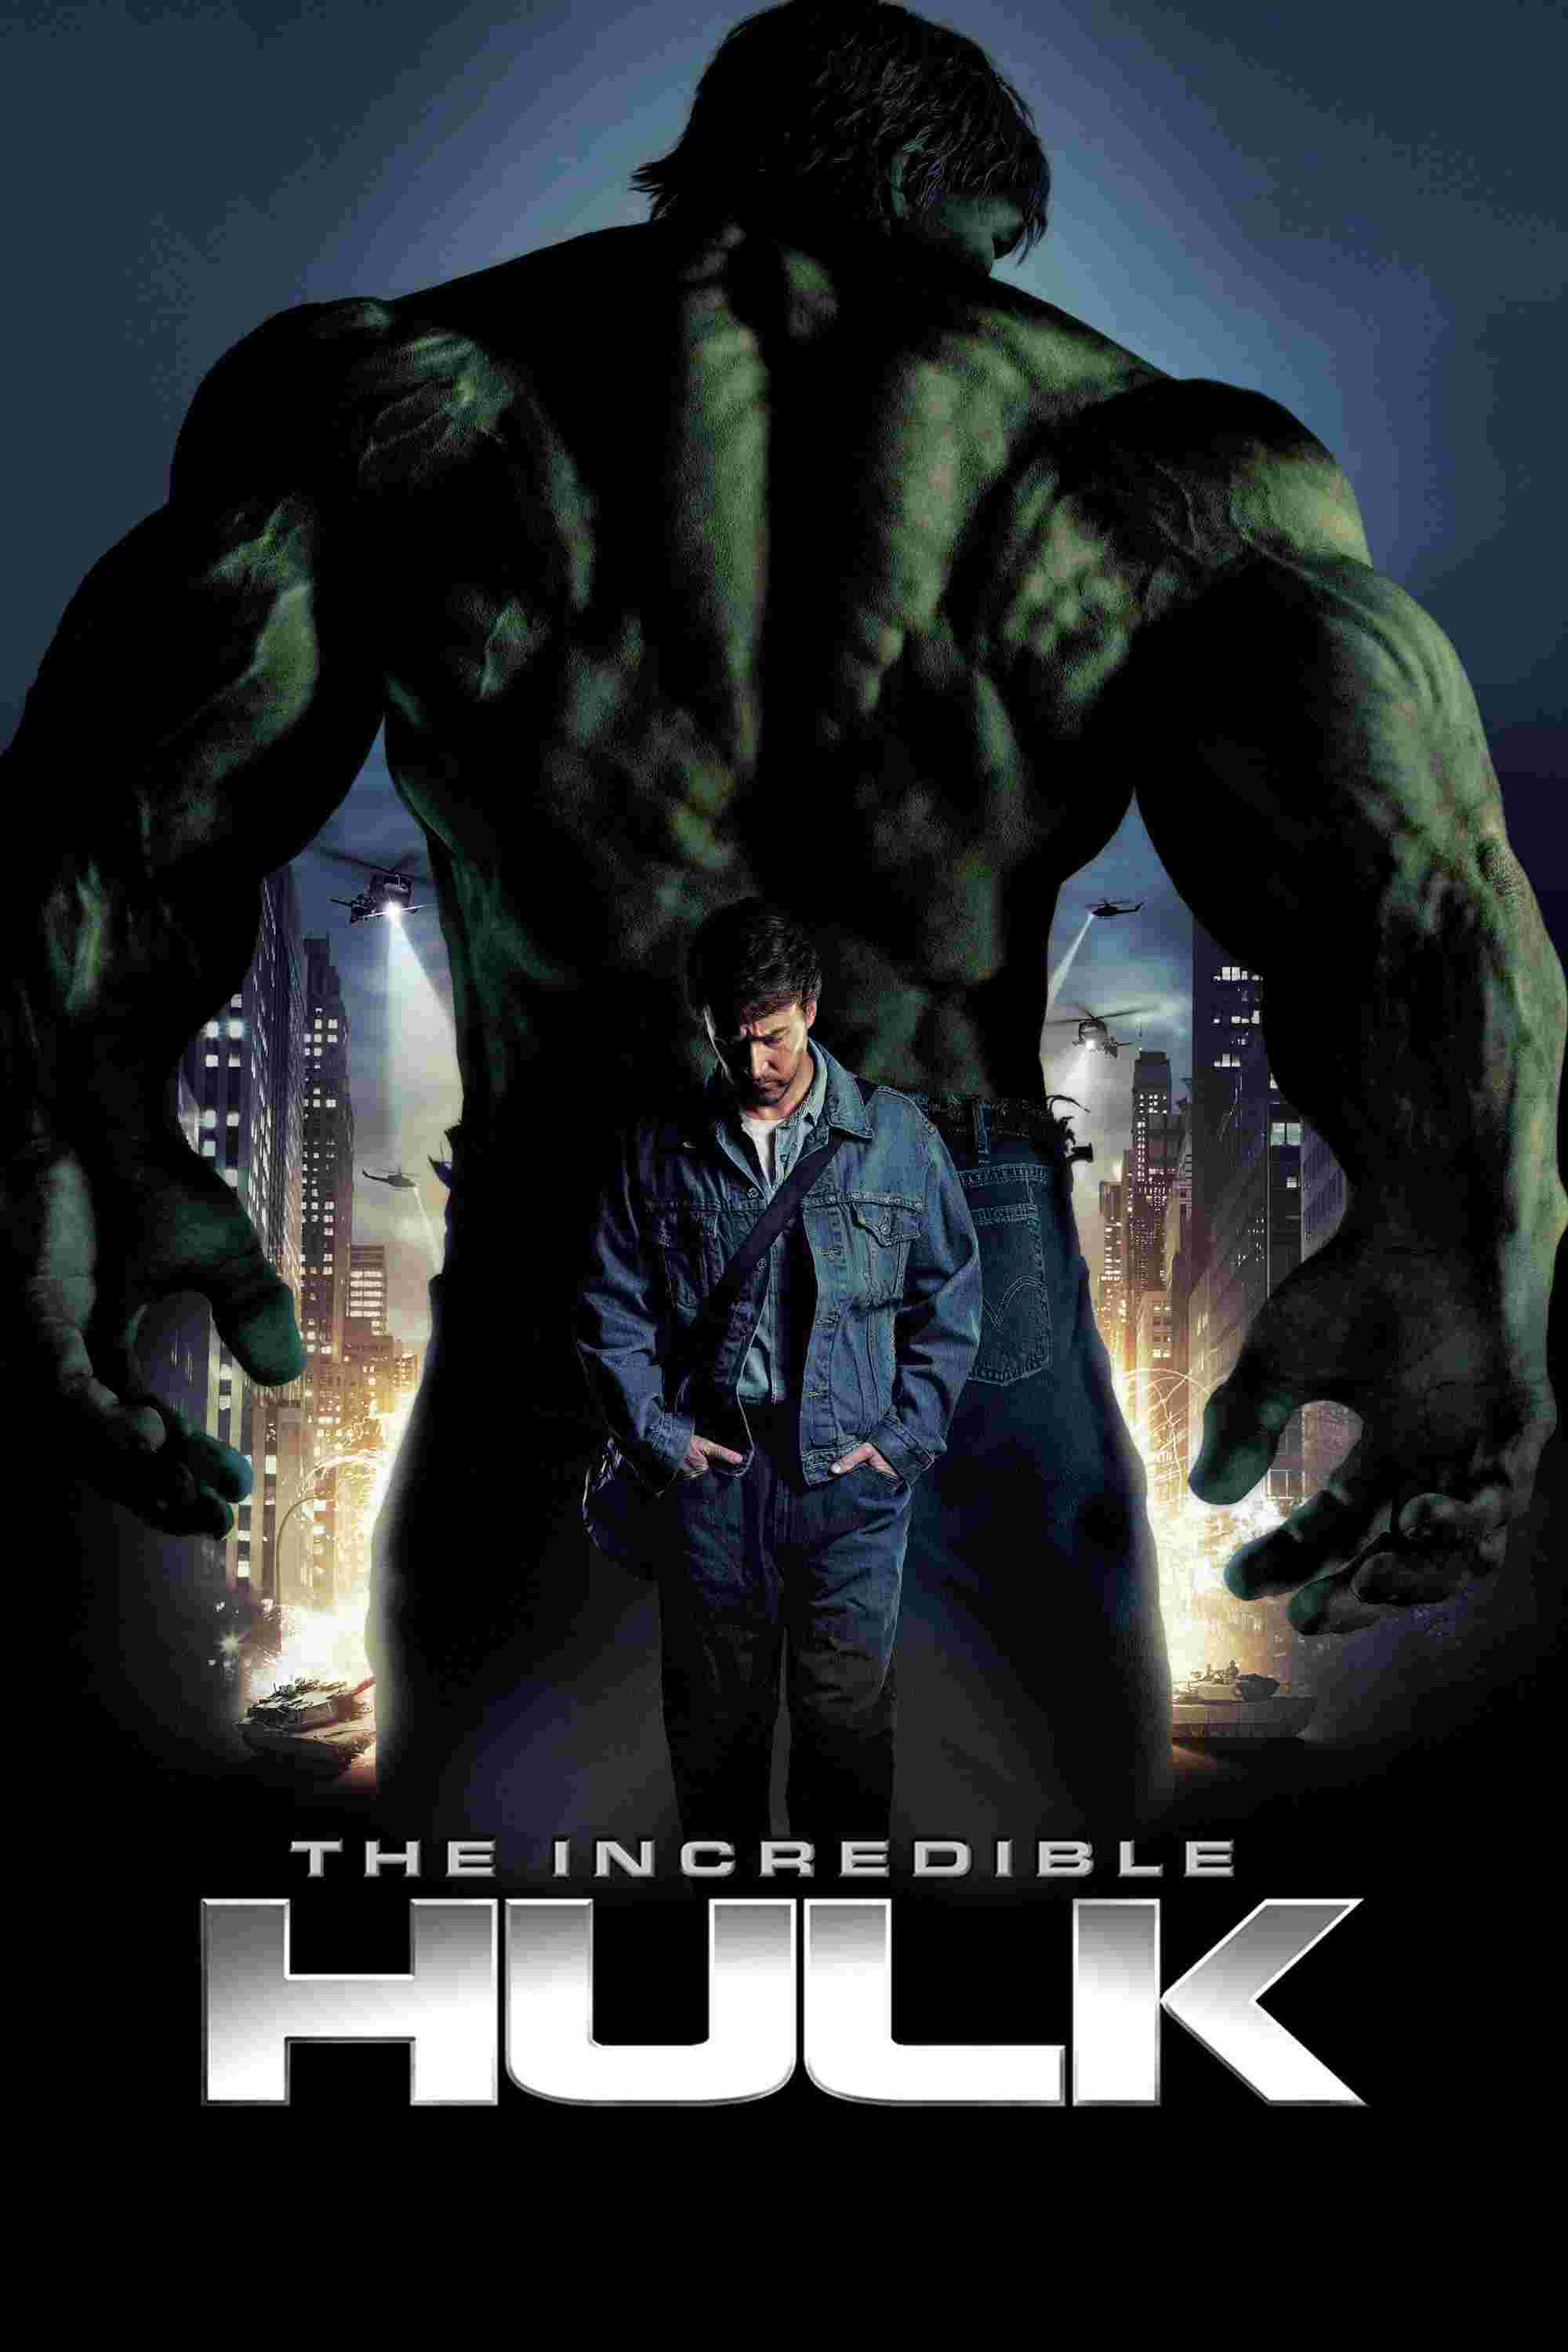 The Incredible Hulk (2008) Edward Norton